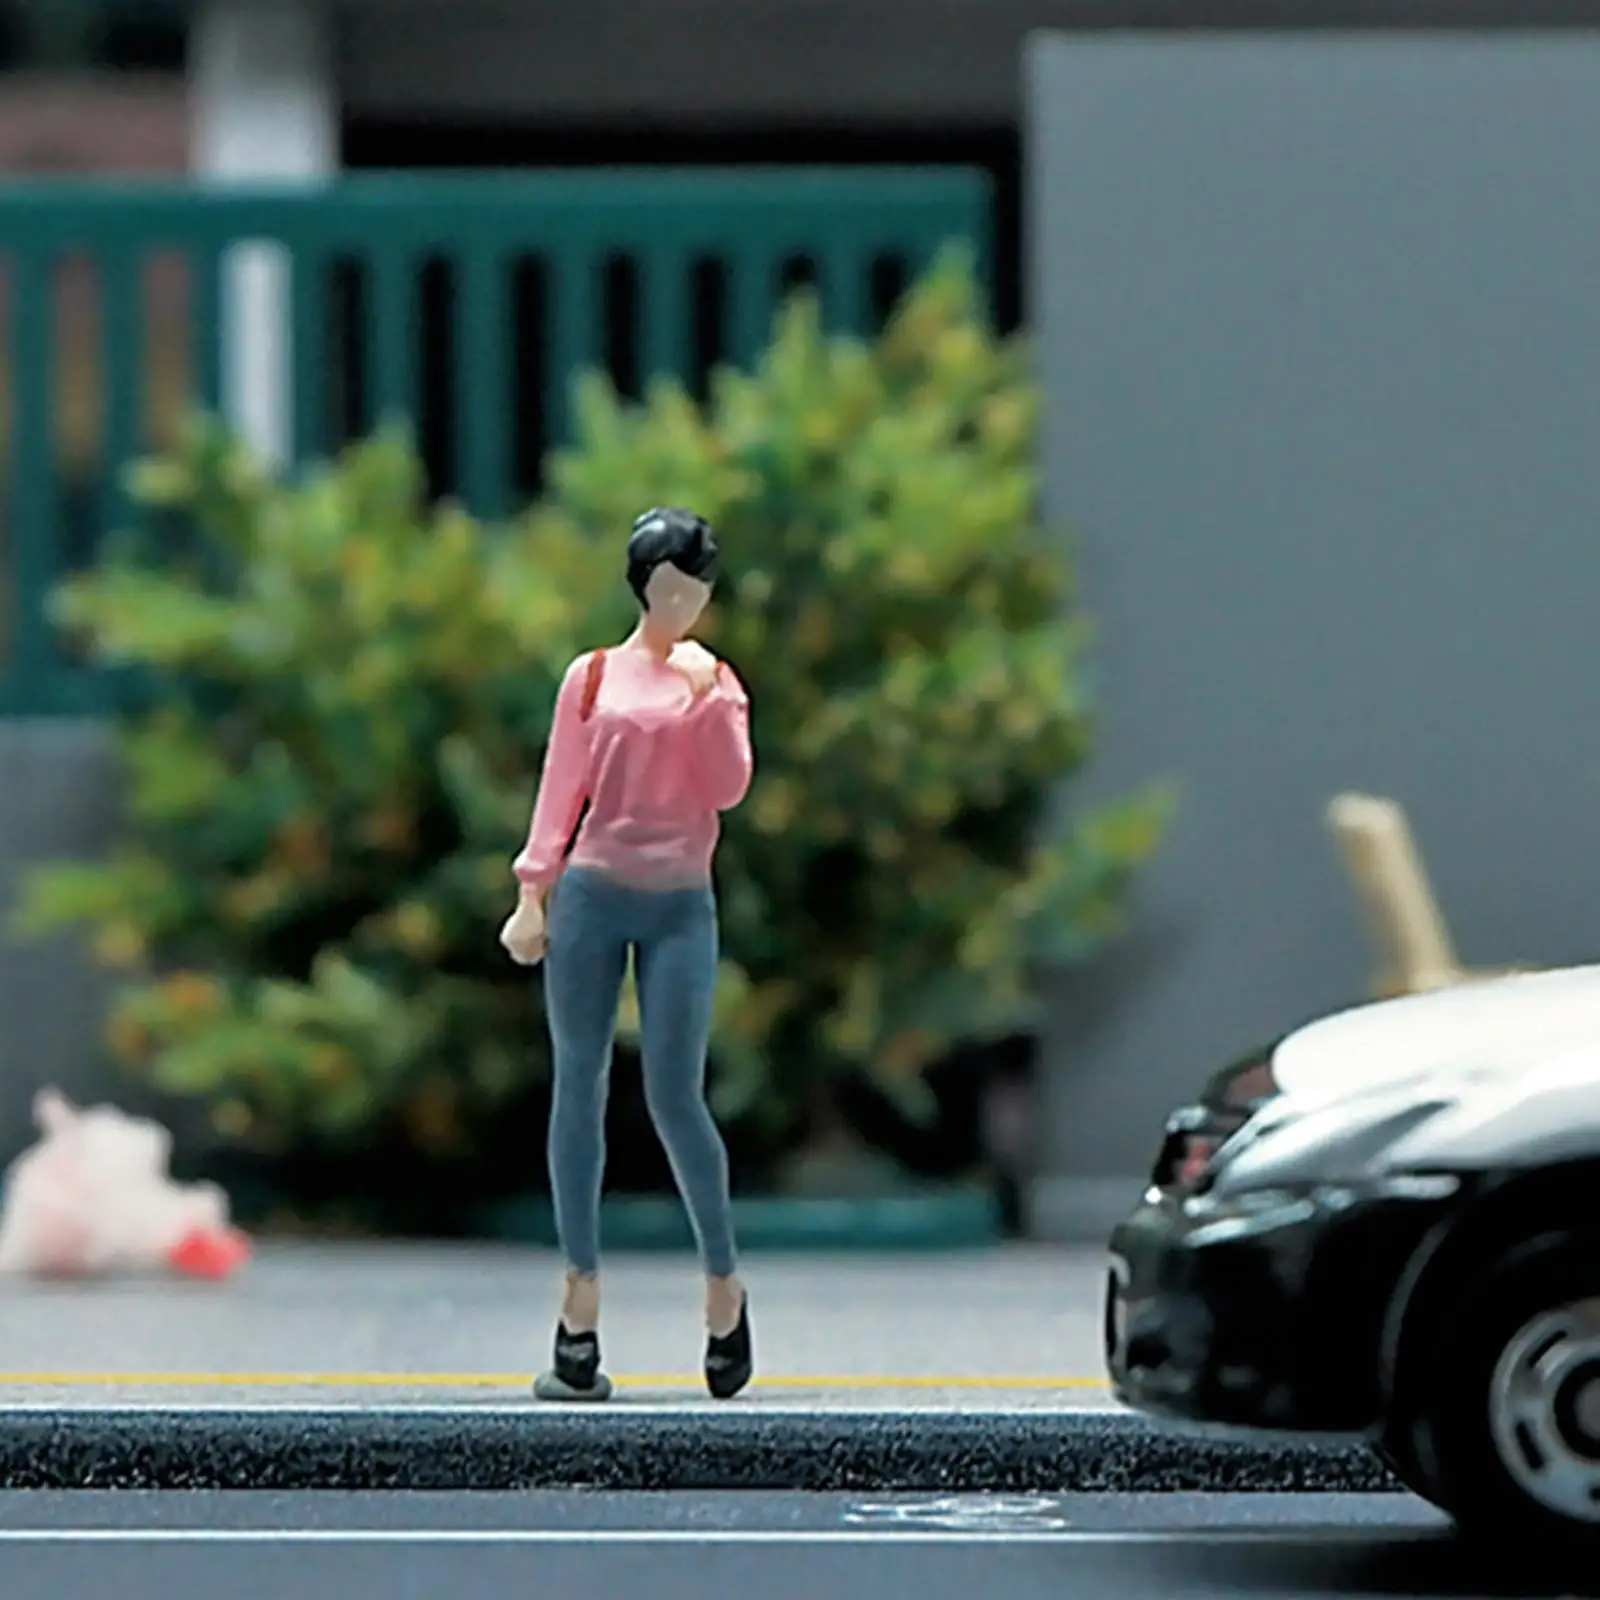 1/64 Model Girl Figures 1/64 Scale Model Figures 1/64 Girl Figures Model for Miniature Scenes Decor Micro Landscapes Decor